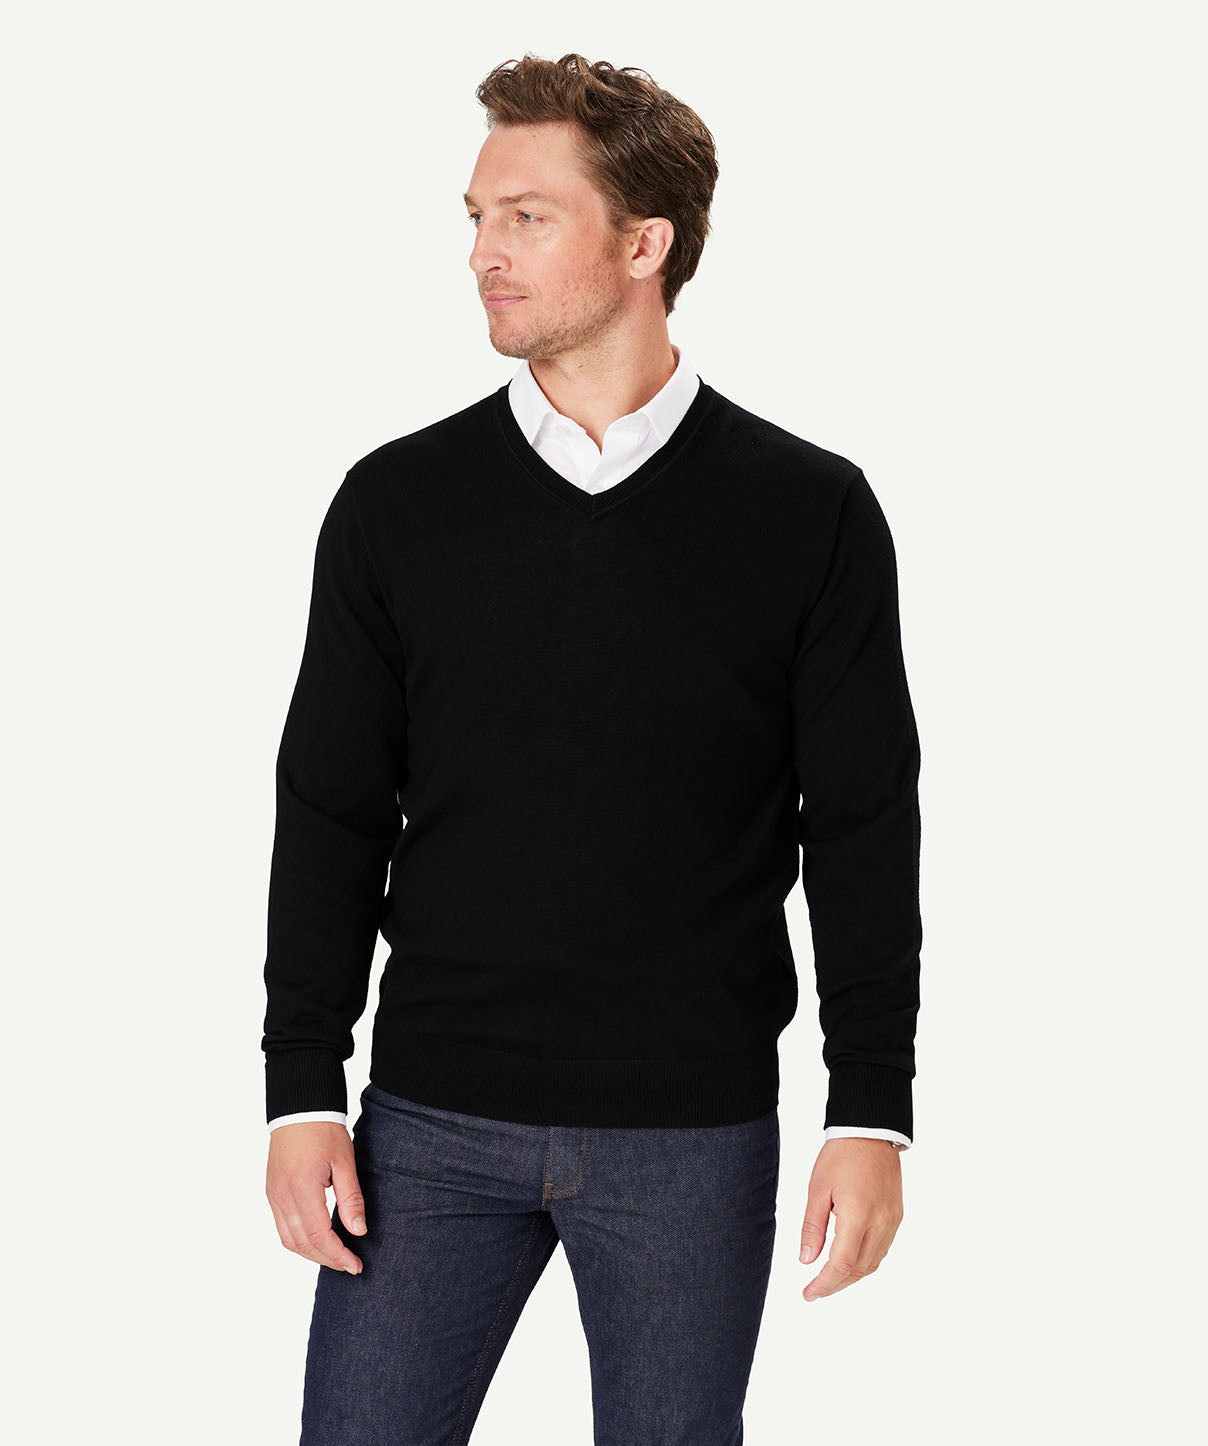 Four Ways to Wear a V-Neck Sweater for Men - GAZMAN